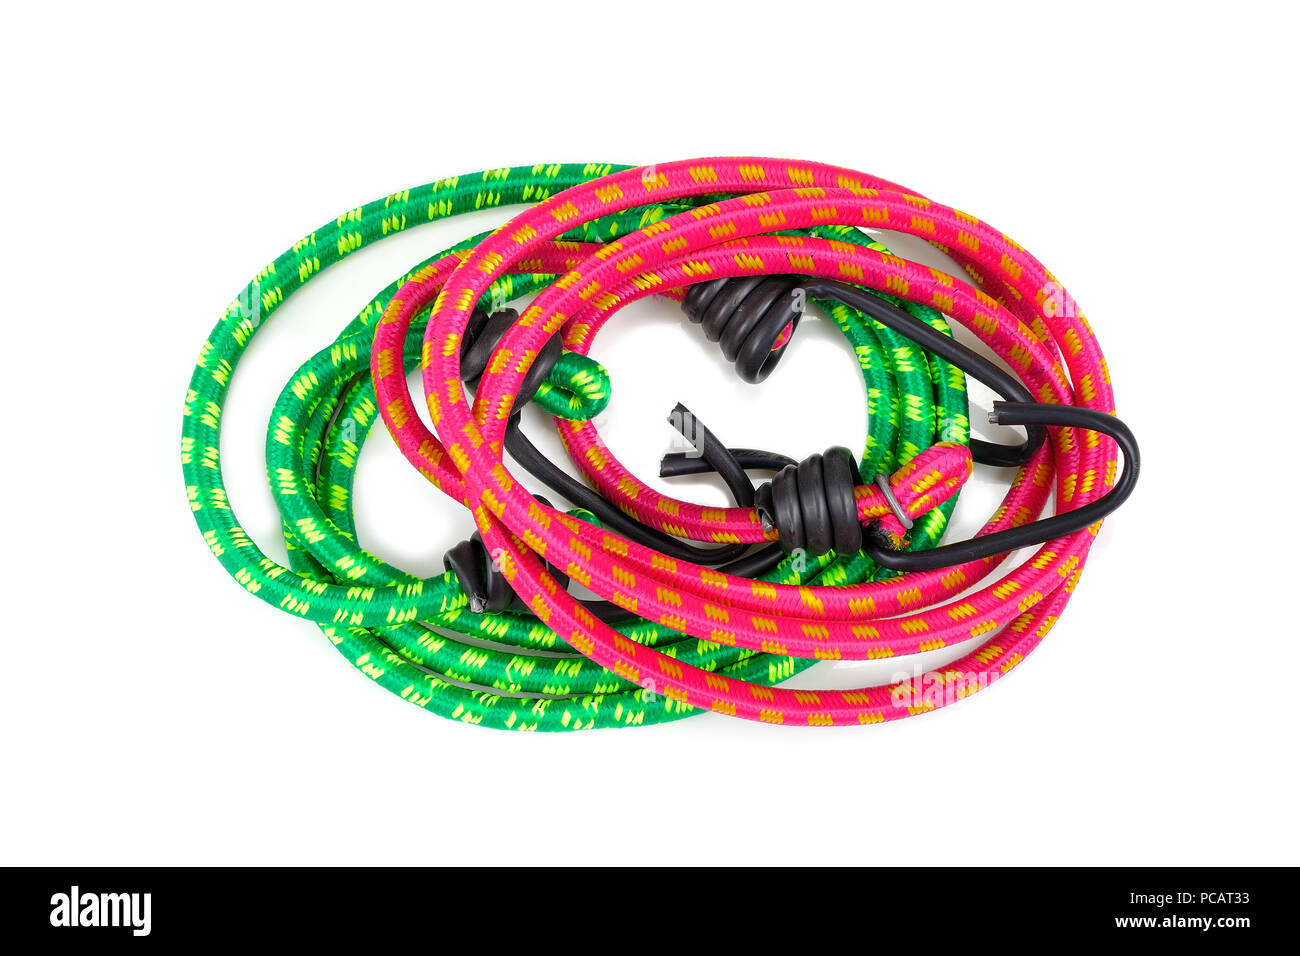 https://c8.alamy.com/comp/PCAT33/elastic-round-rope-with-hooks-for-handbag-PCAT33.jpg